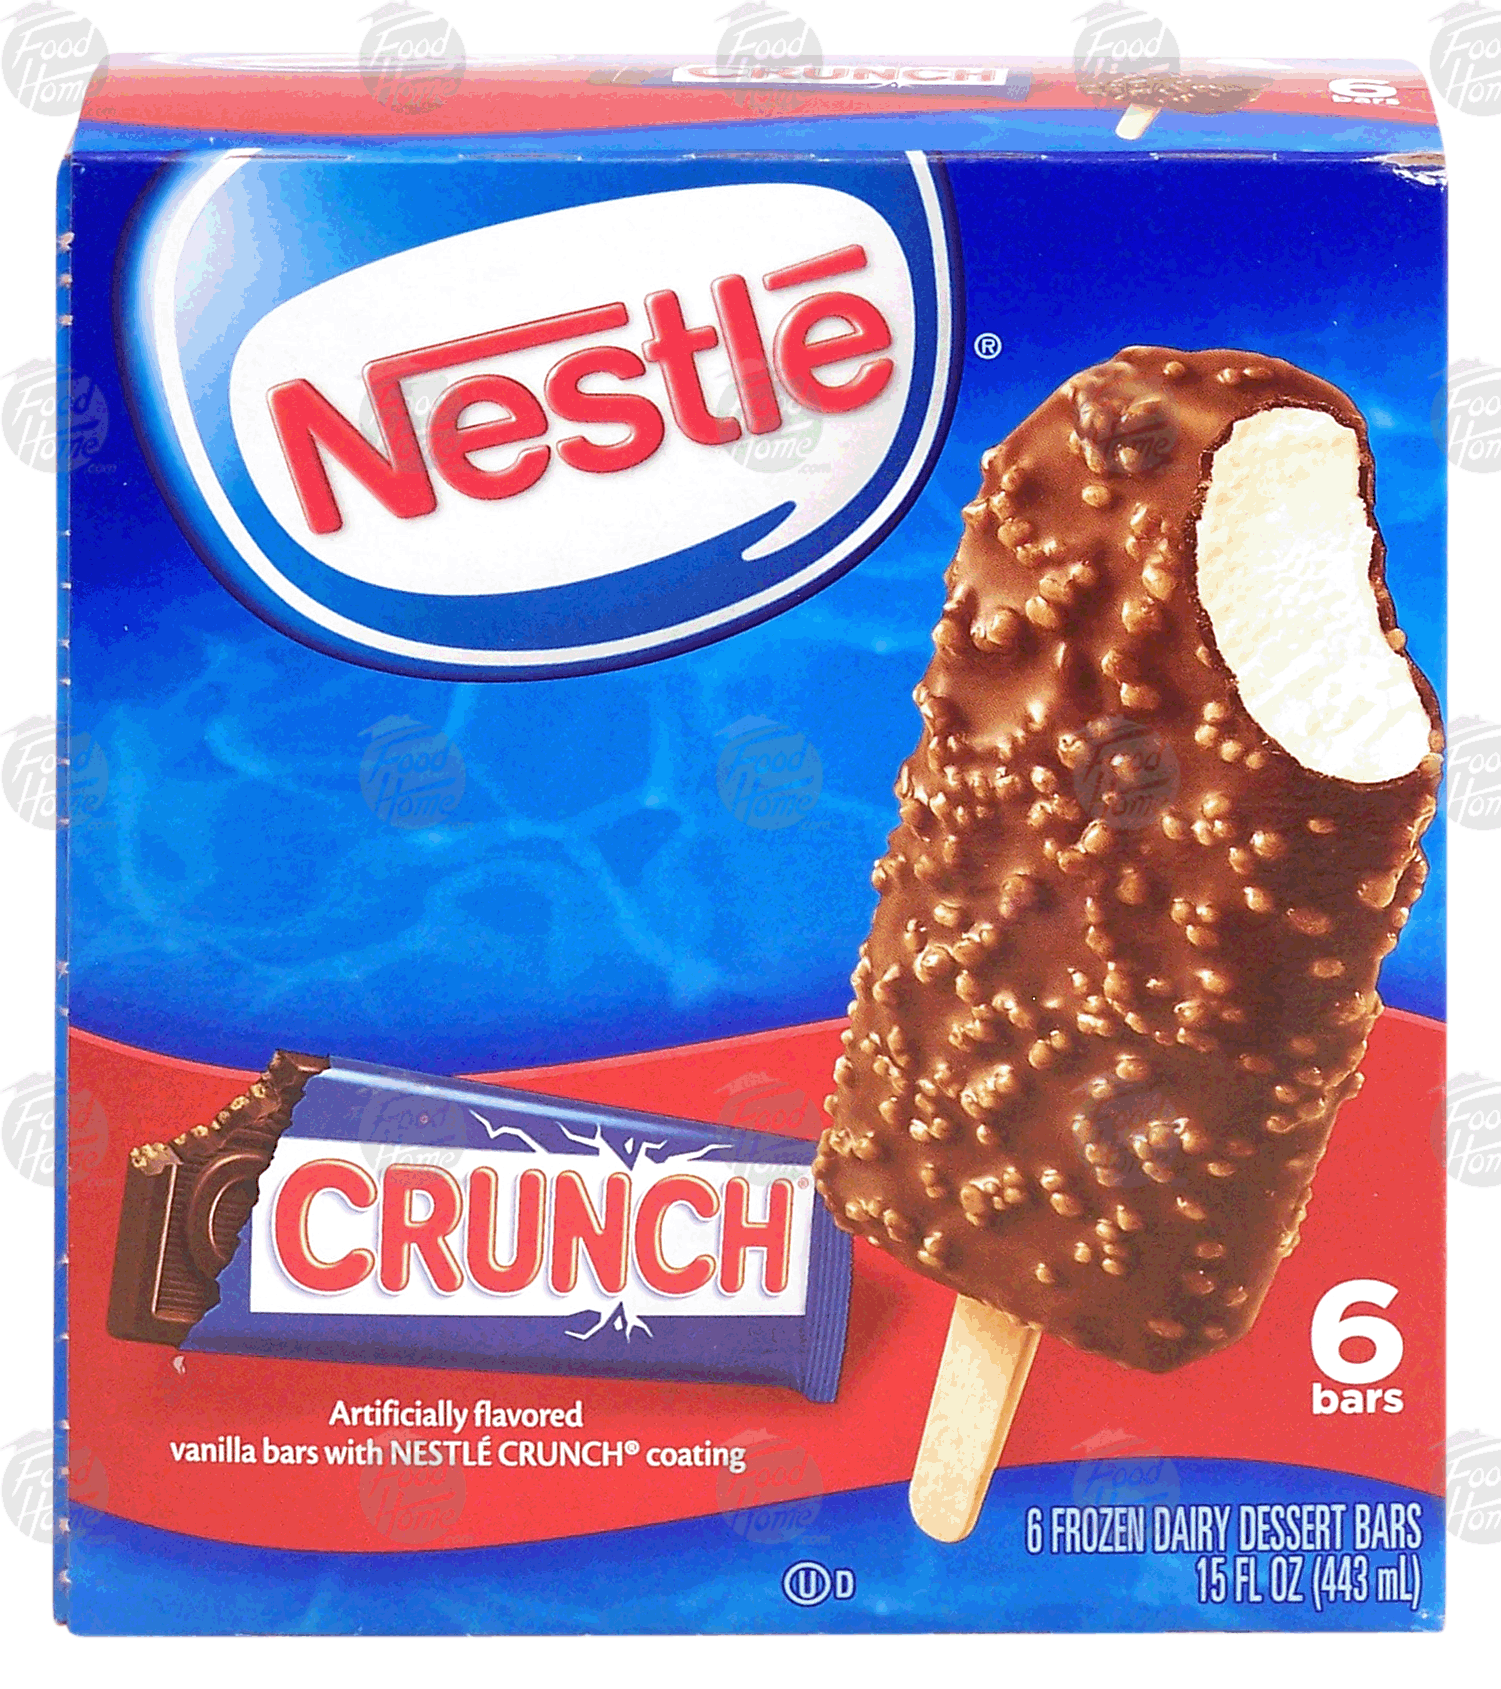 Nestle  vanilla bars with nestle crunch coating, 6 bars Full-Size Picture